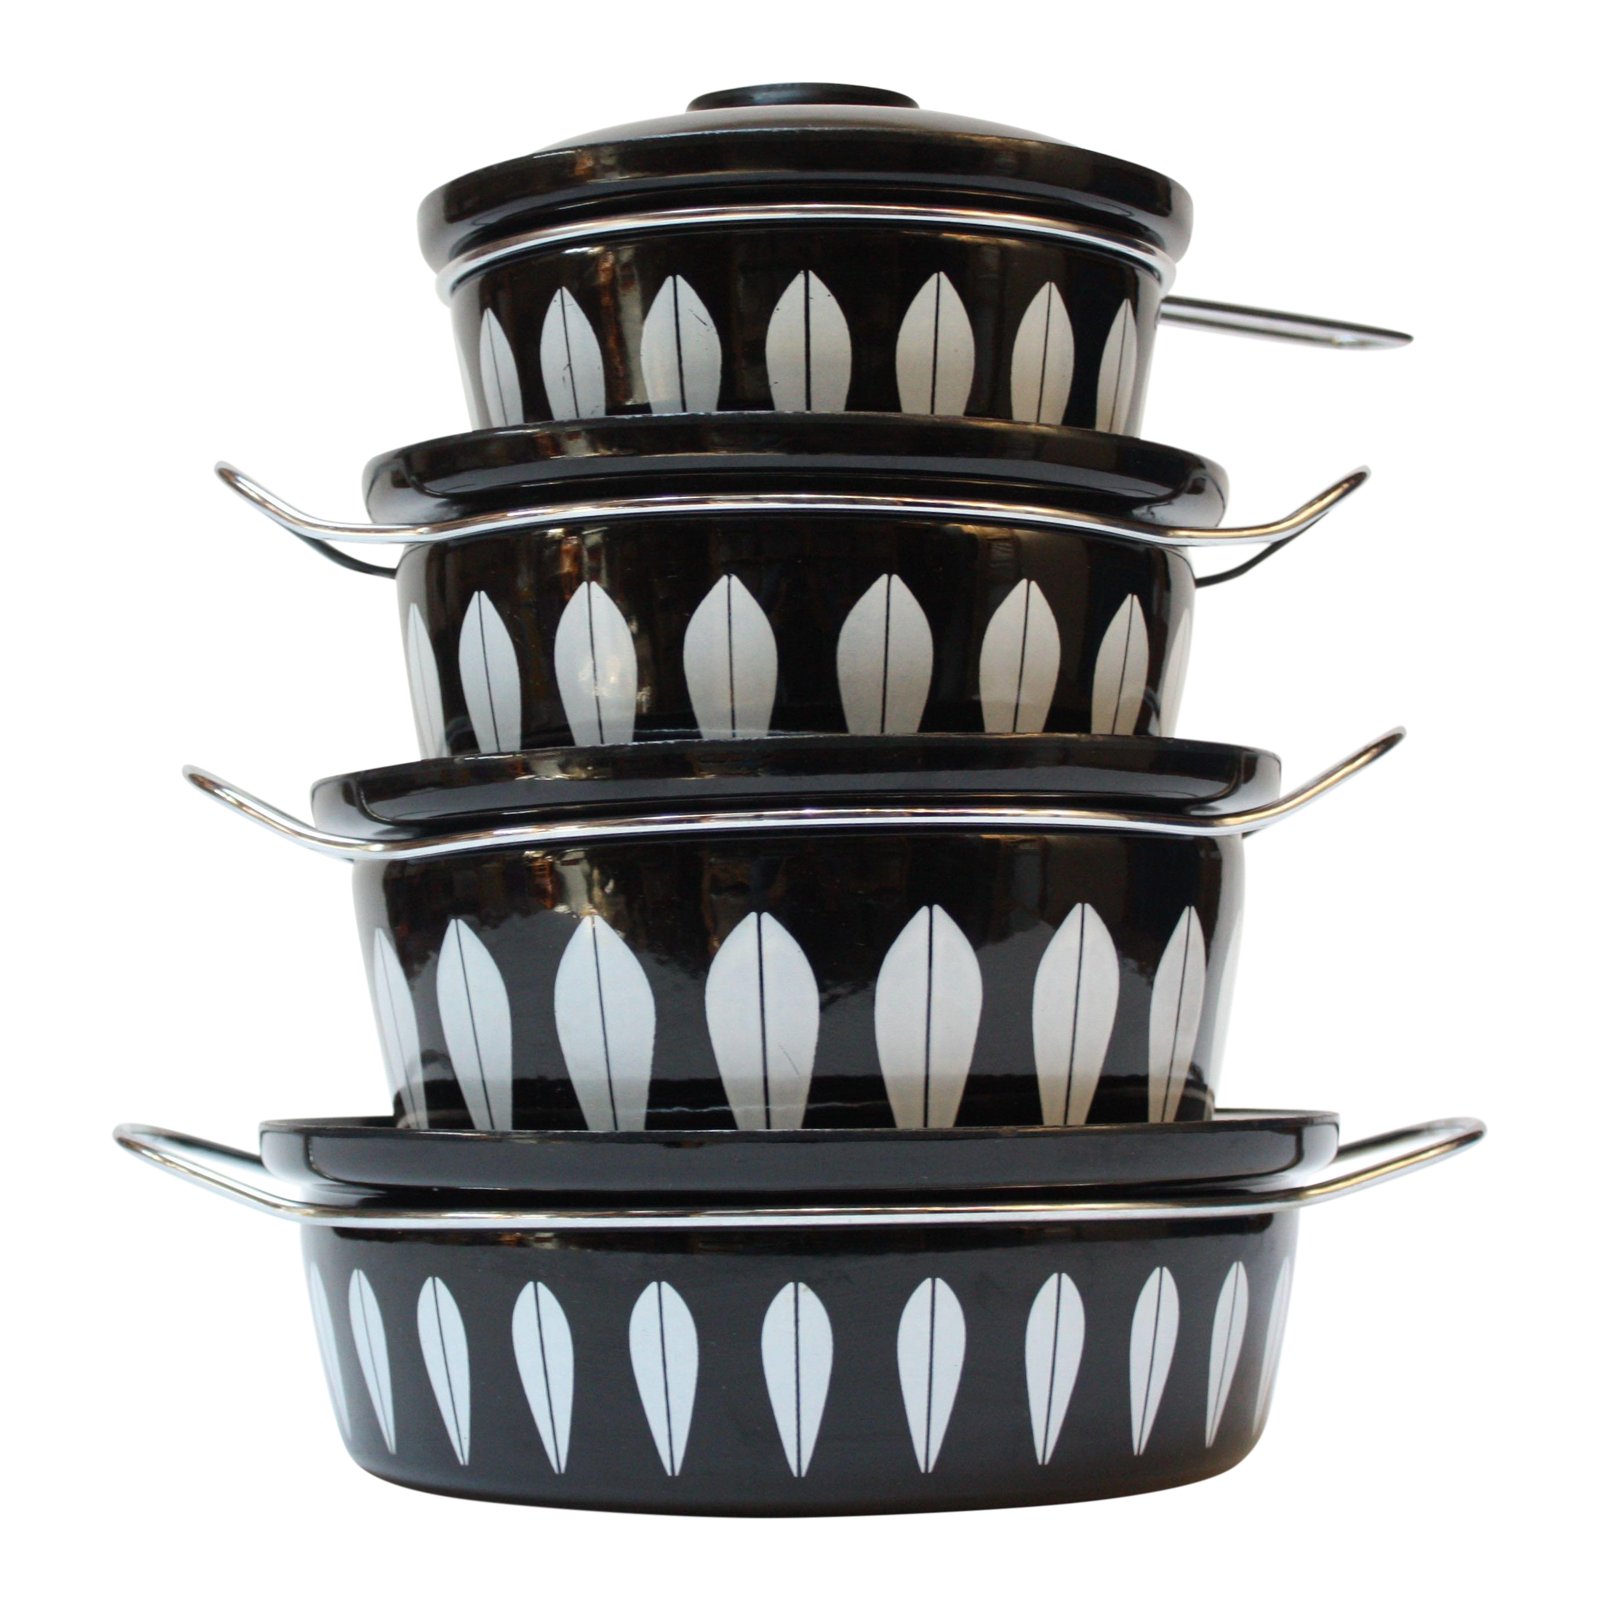 Vintage Black & White Enamelware Saucepan / Small Enamel Pot with